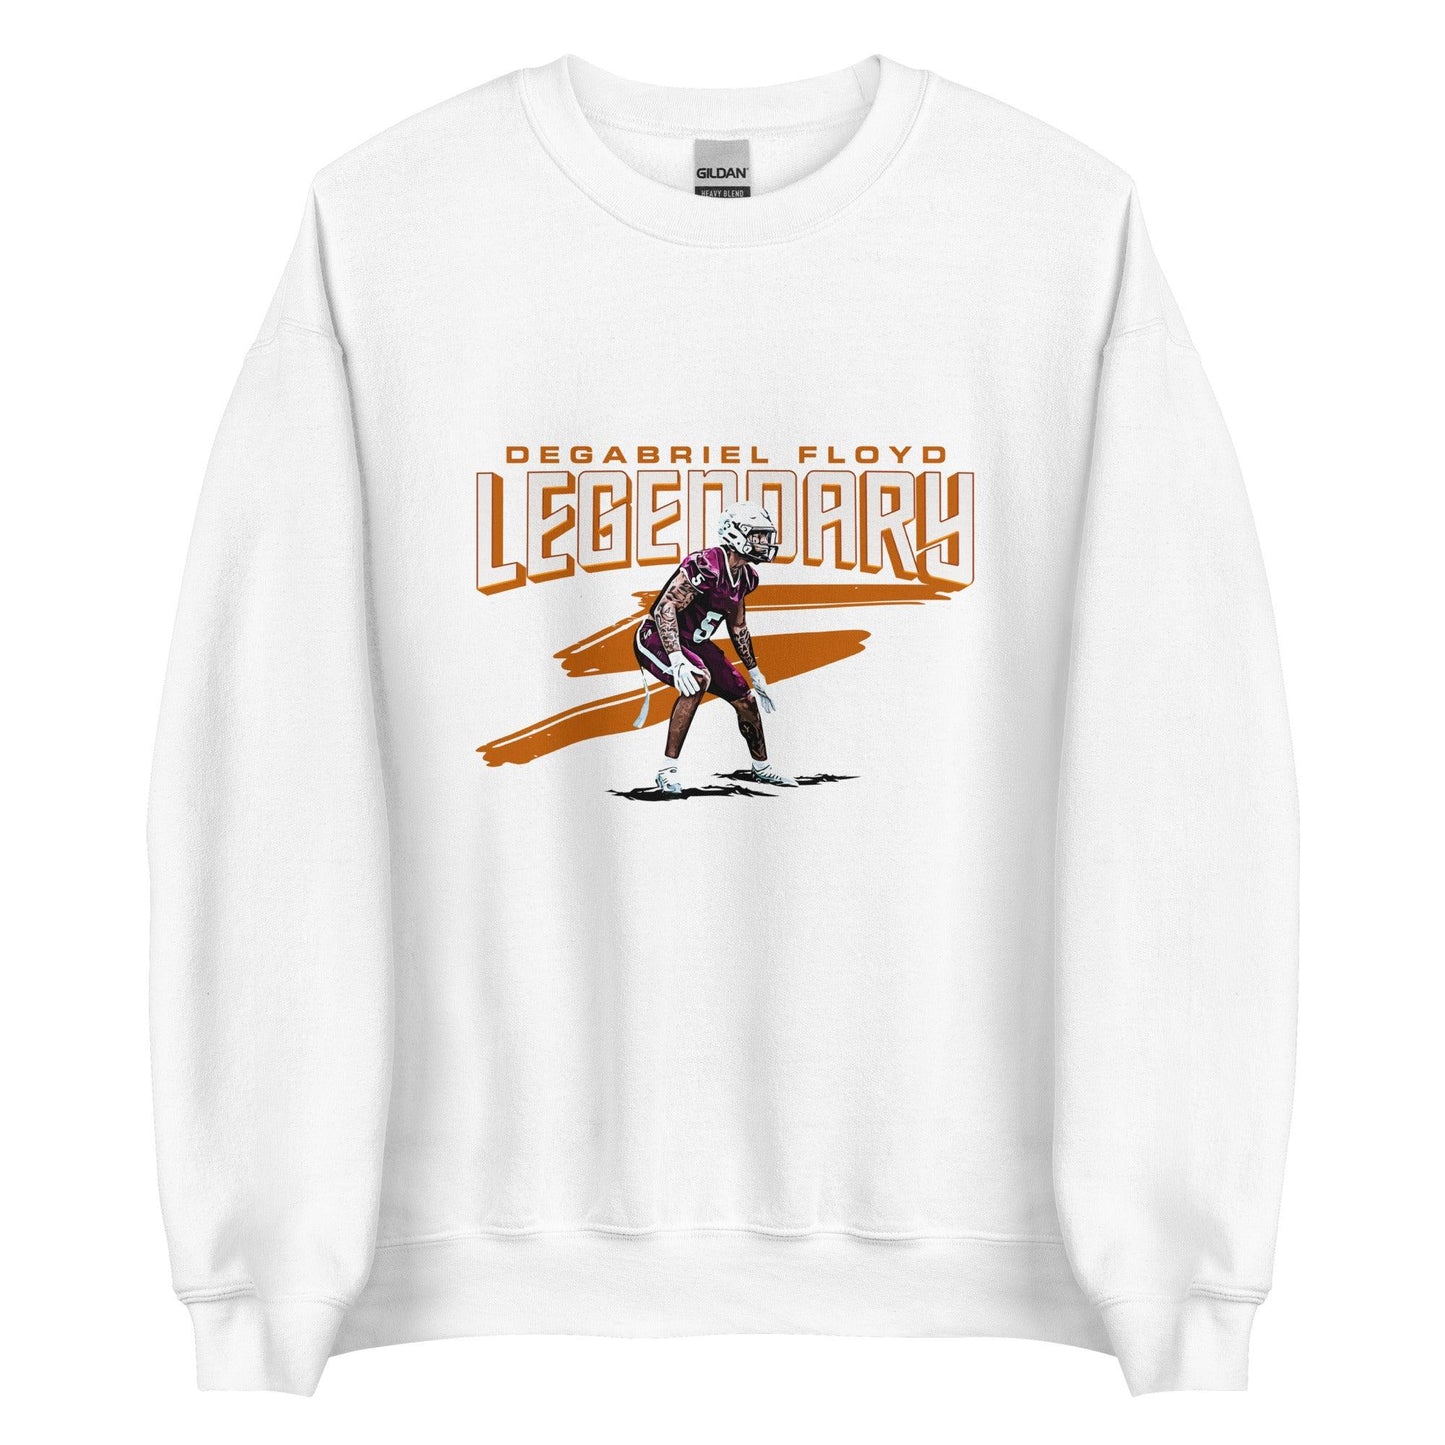 DeGabriel Floyd "Legendary" Sweatshirt - Fan Arch